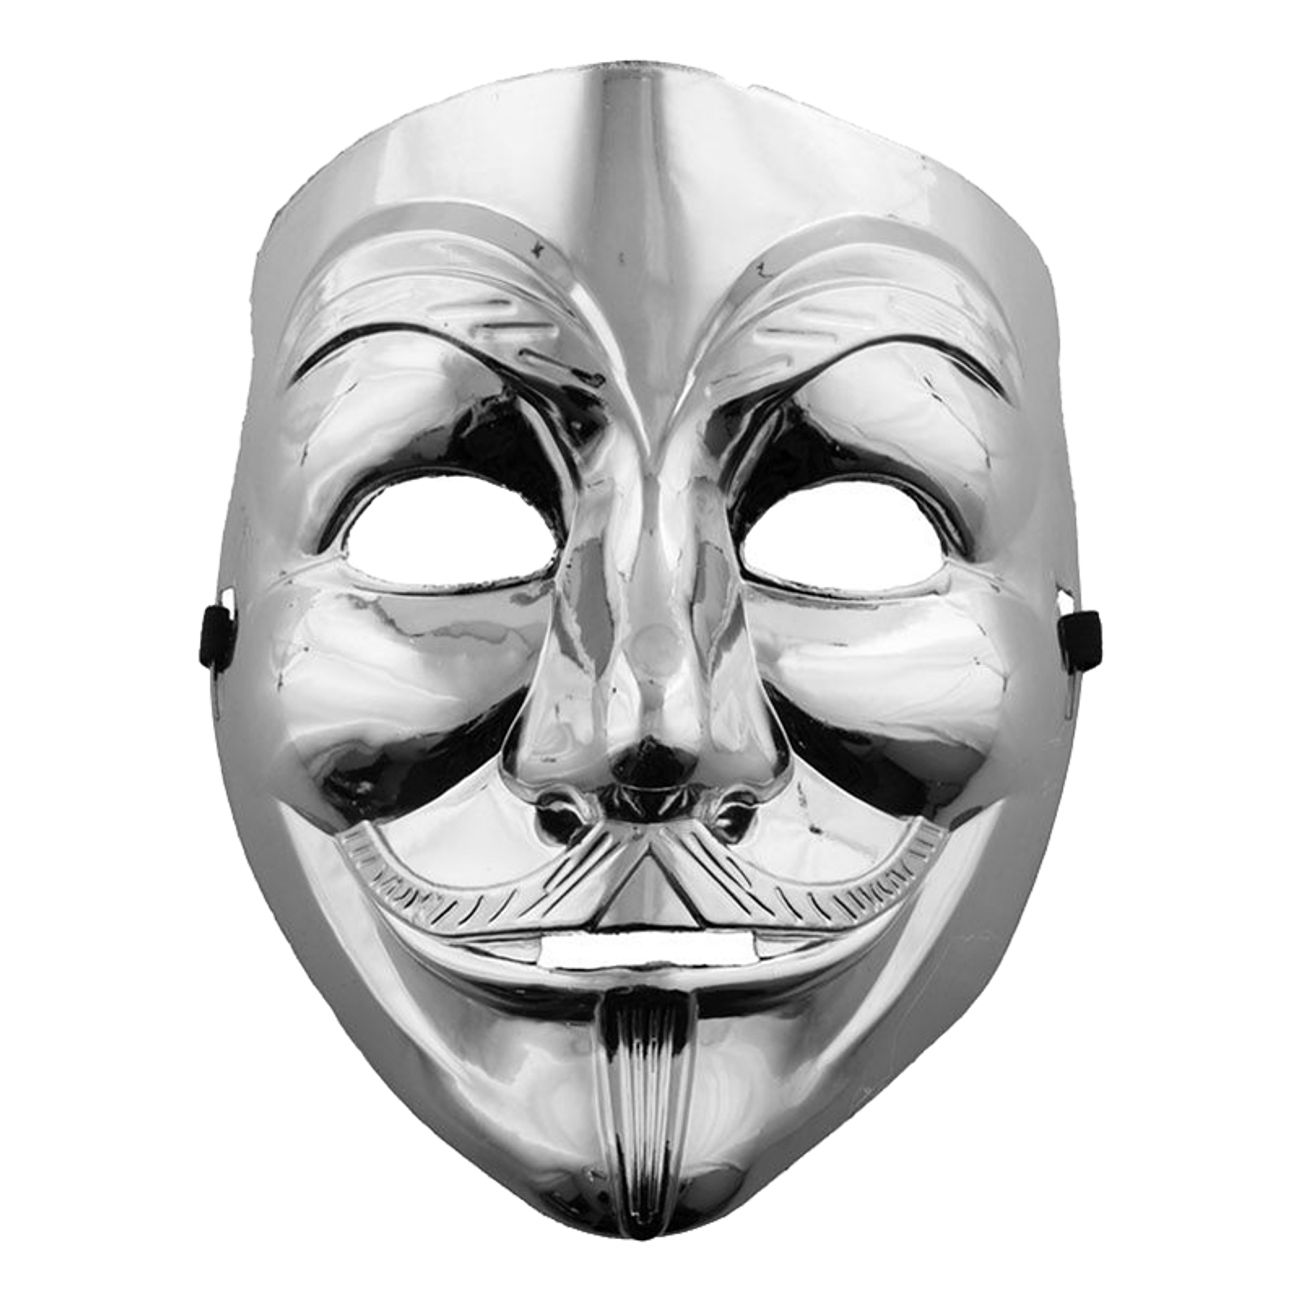 v-for-vendetta-mask-silver-2